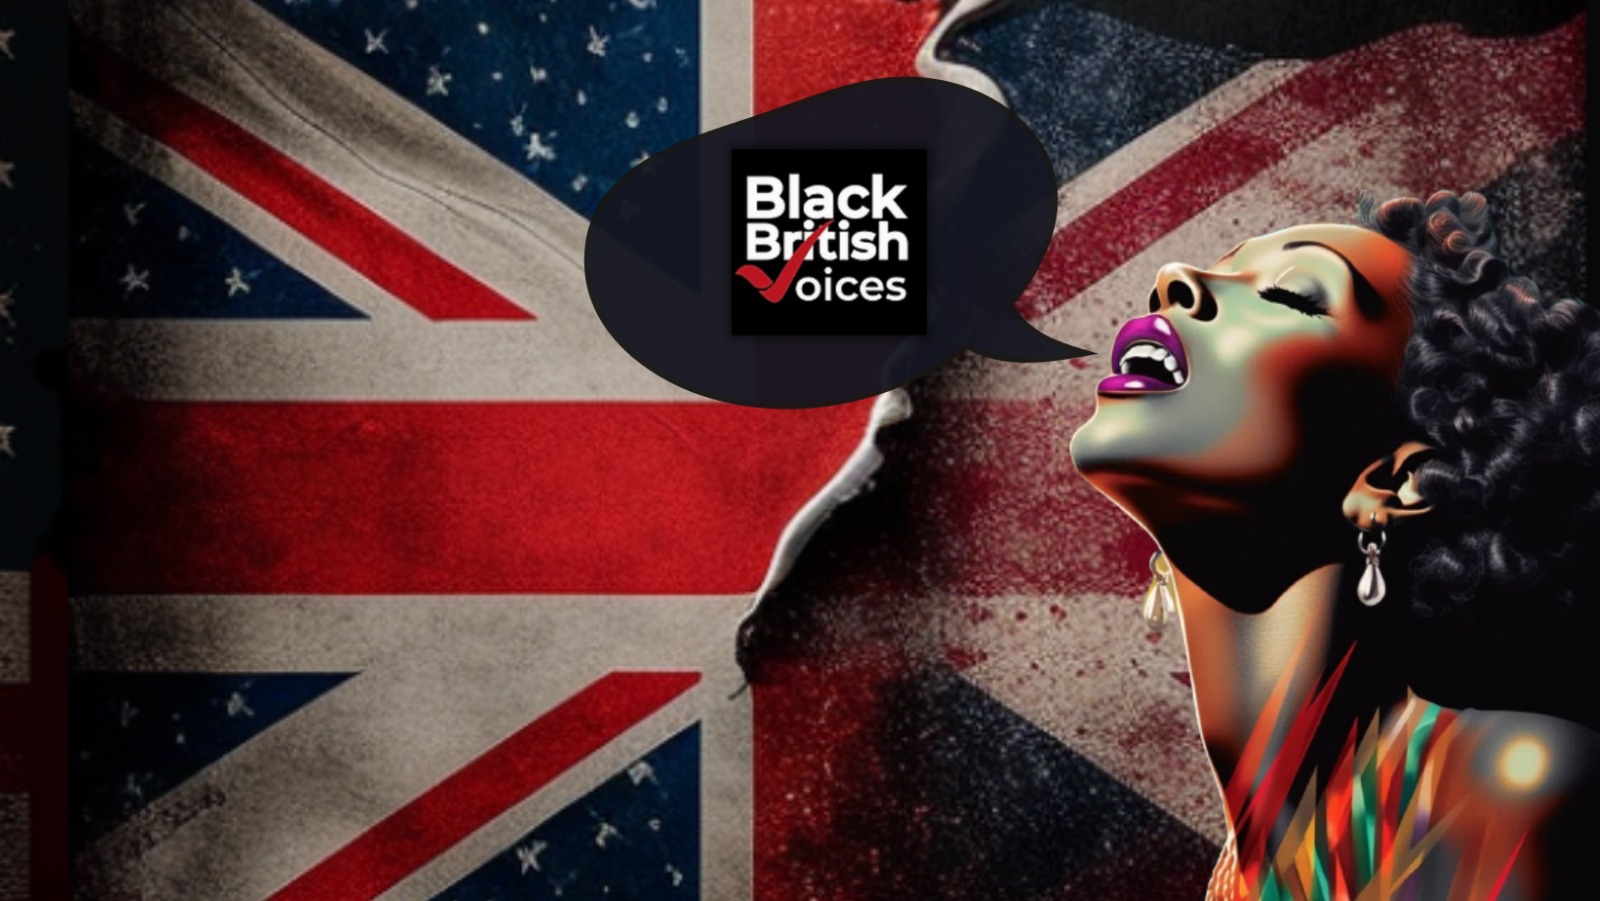 Black British Voices – Taking Action